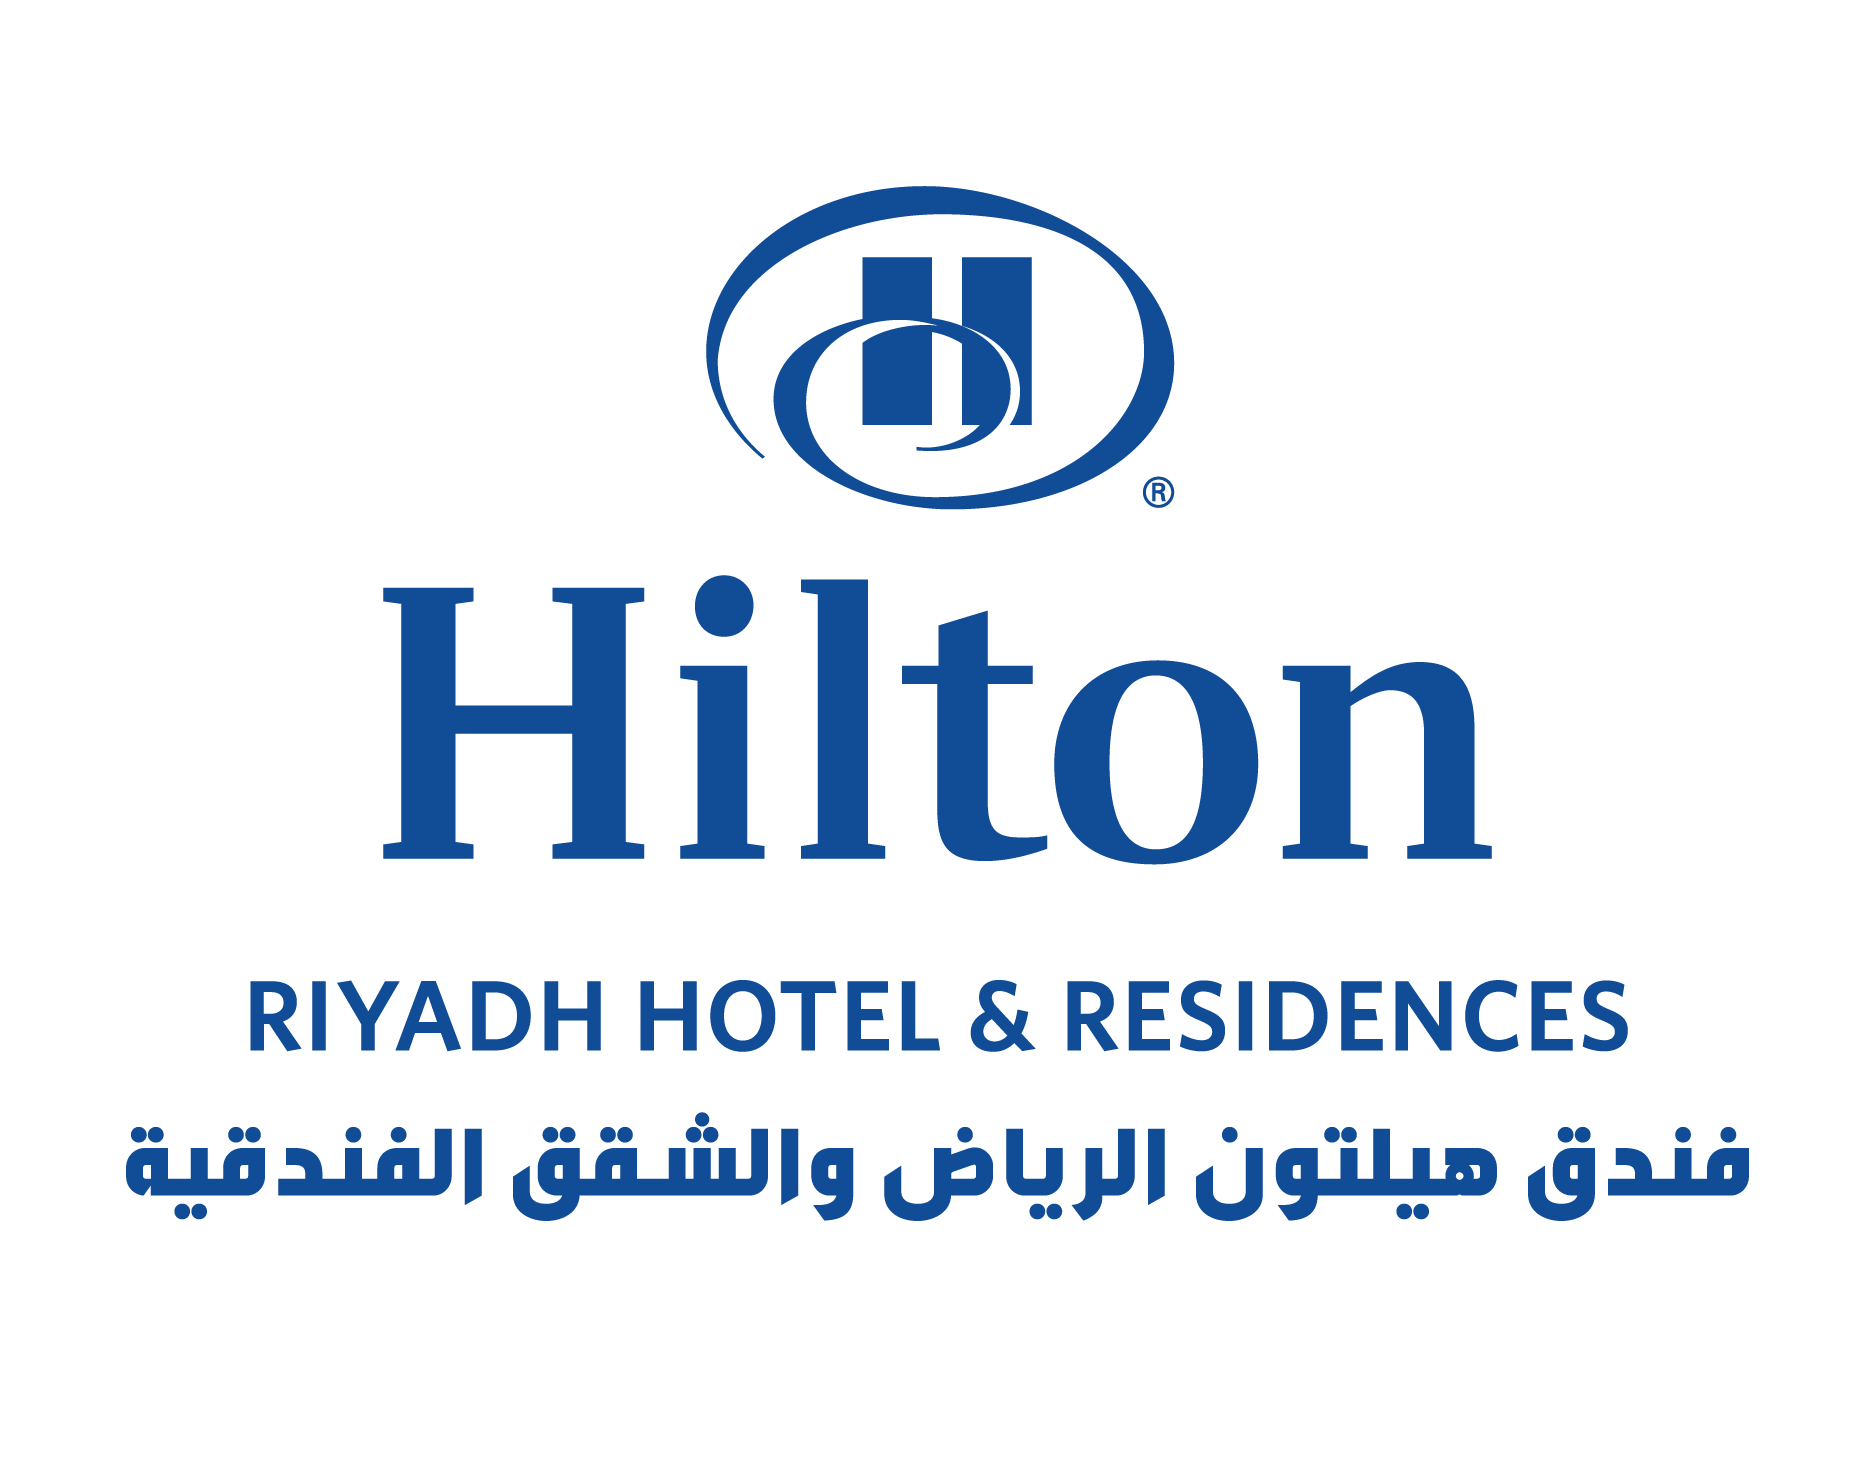 Hilton Riyadh logo